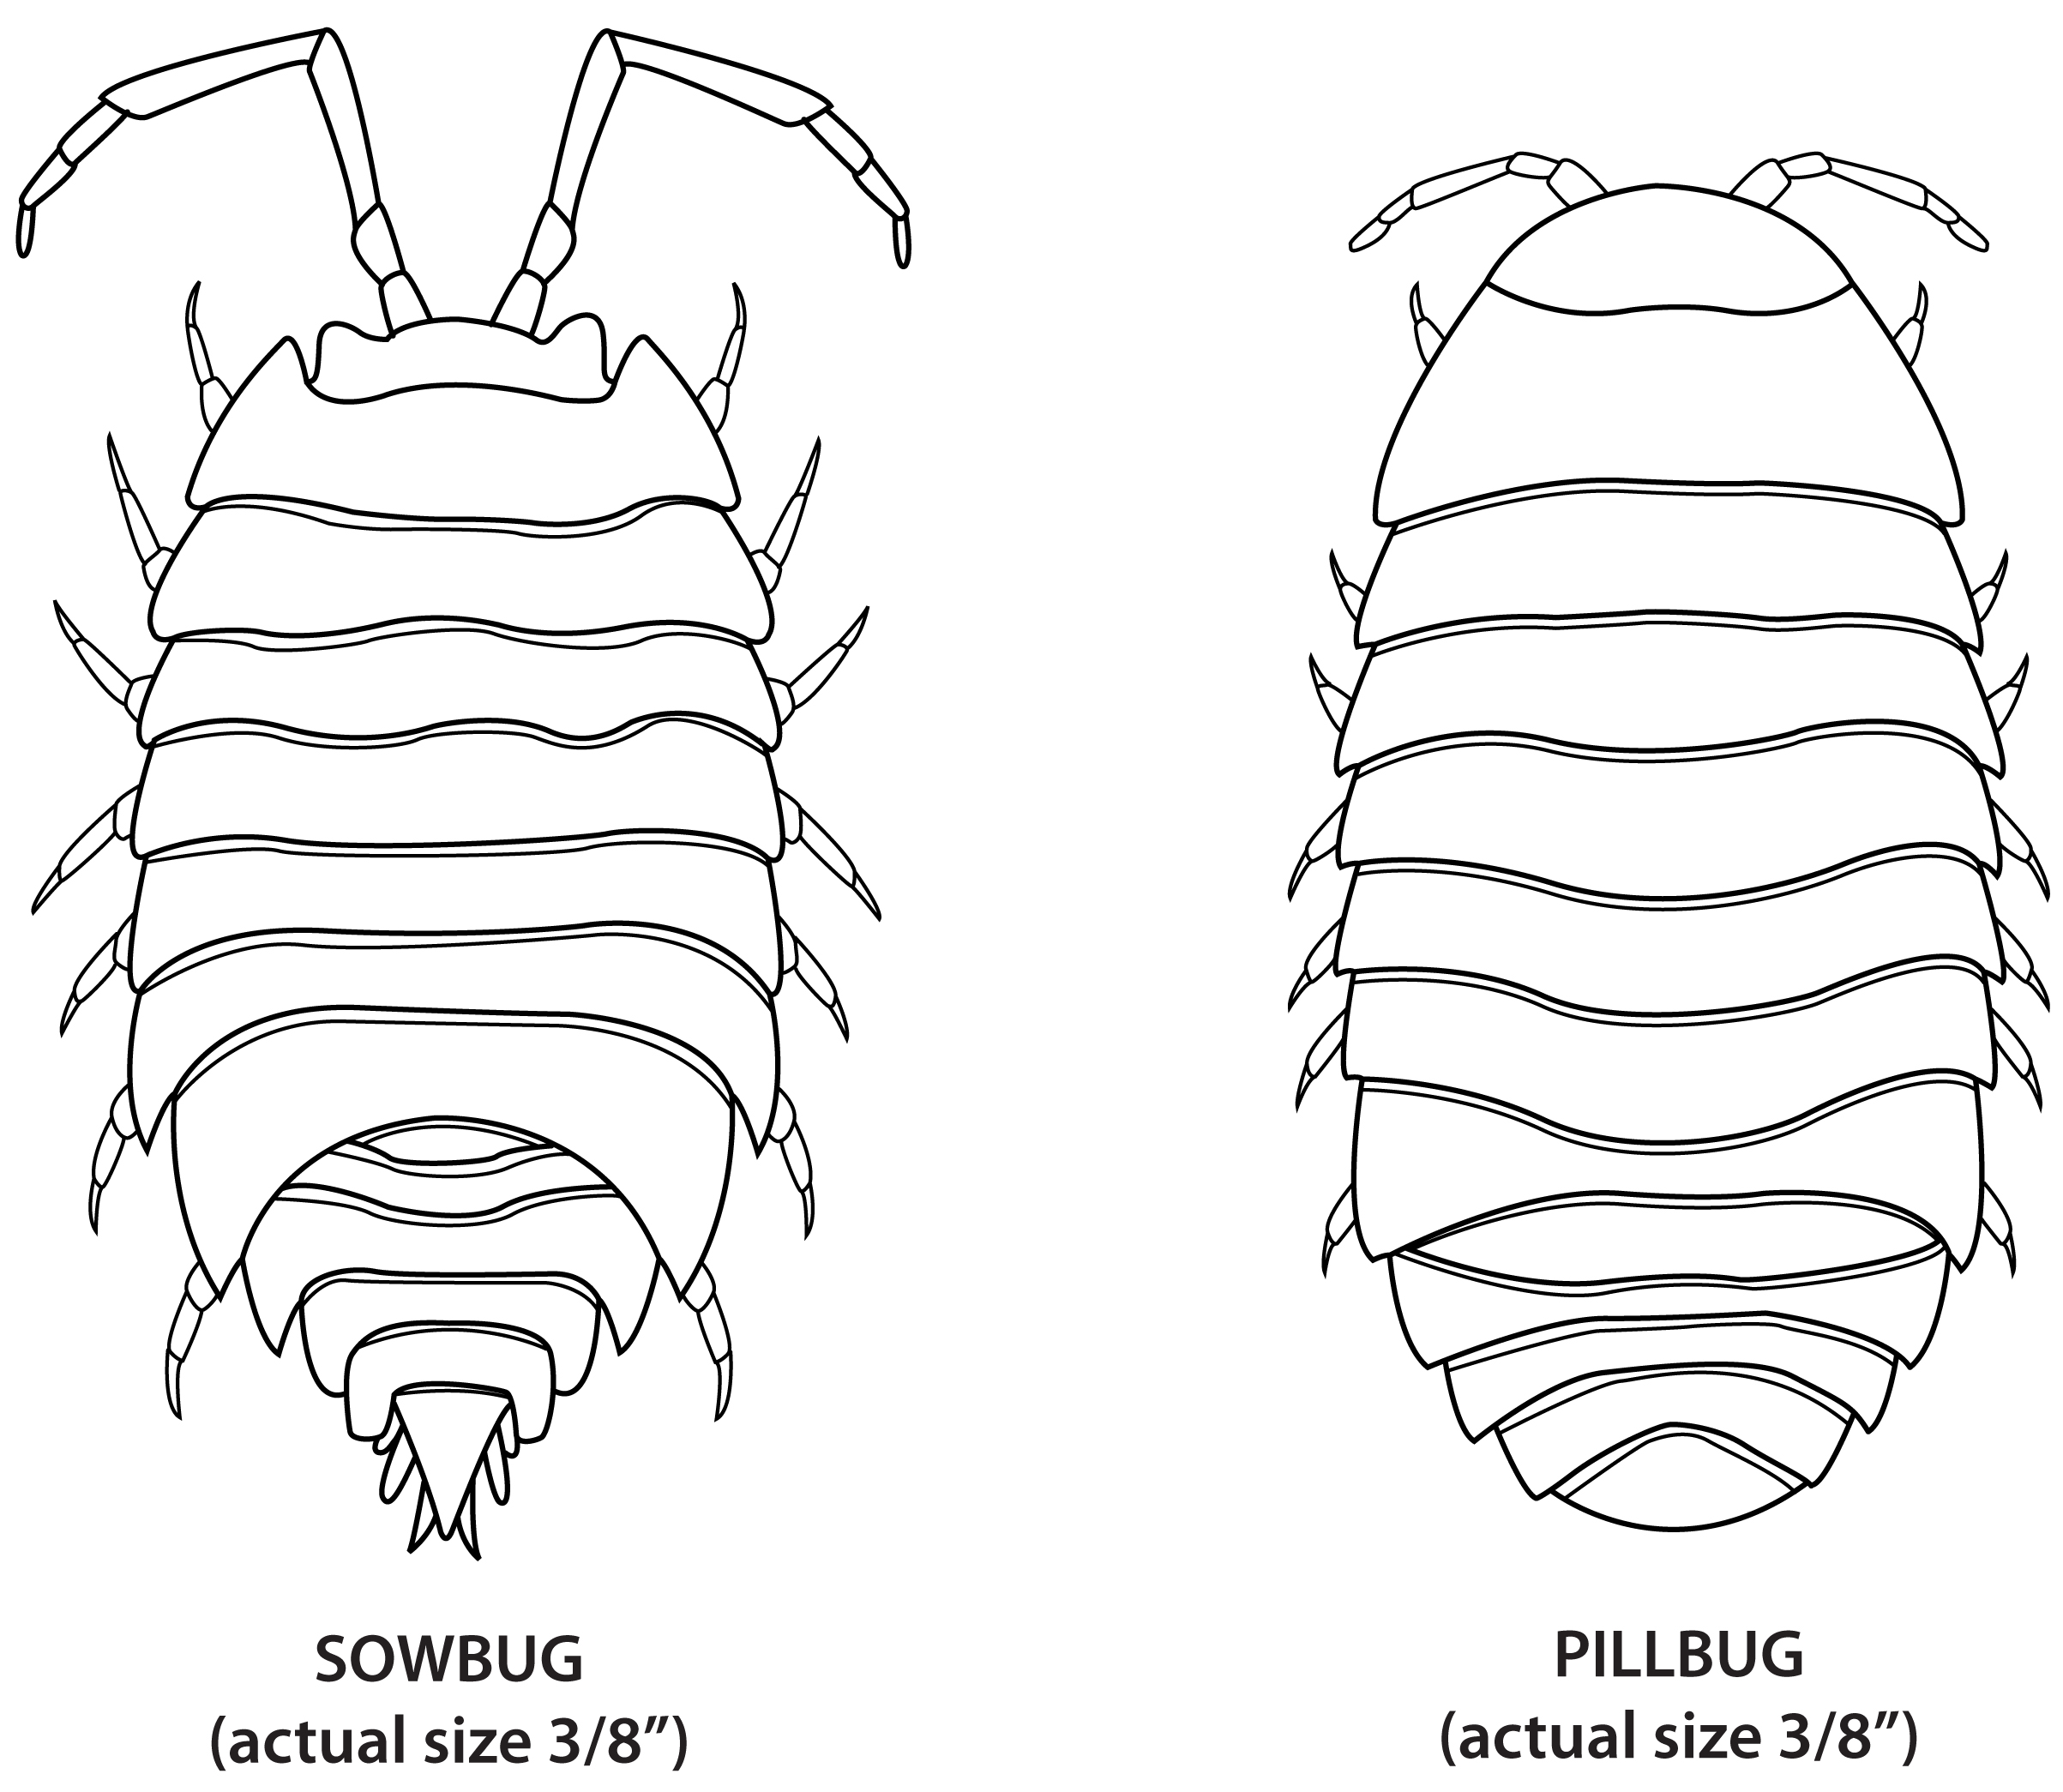 Sowbug and pillbug.